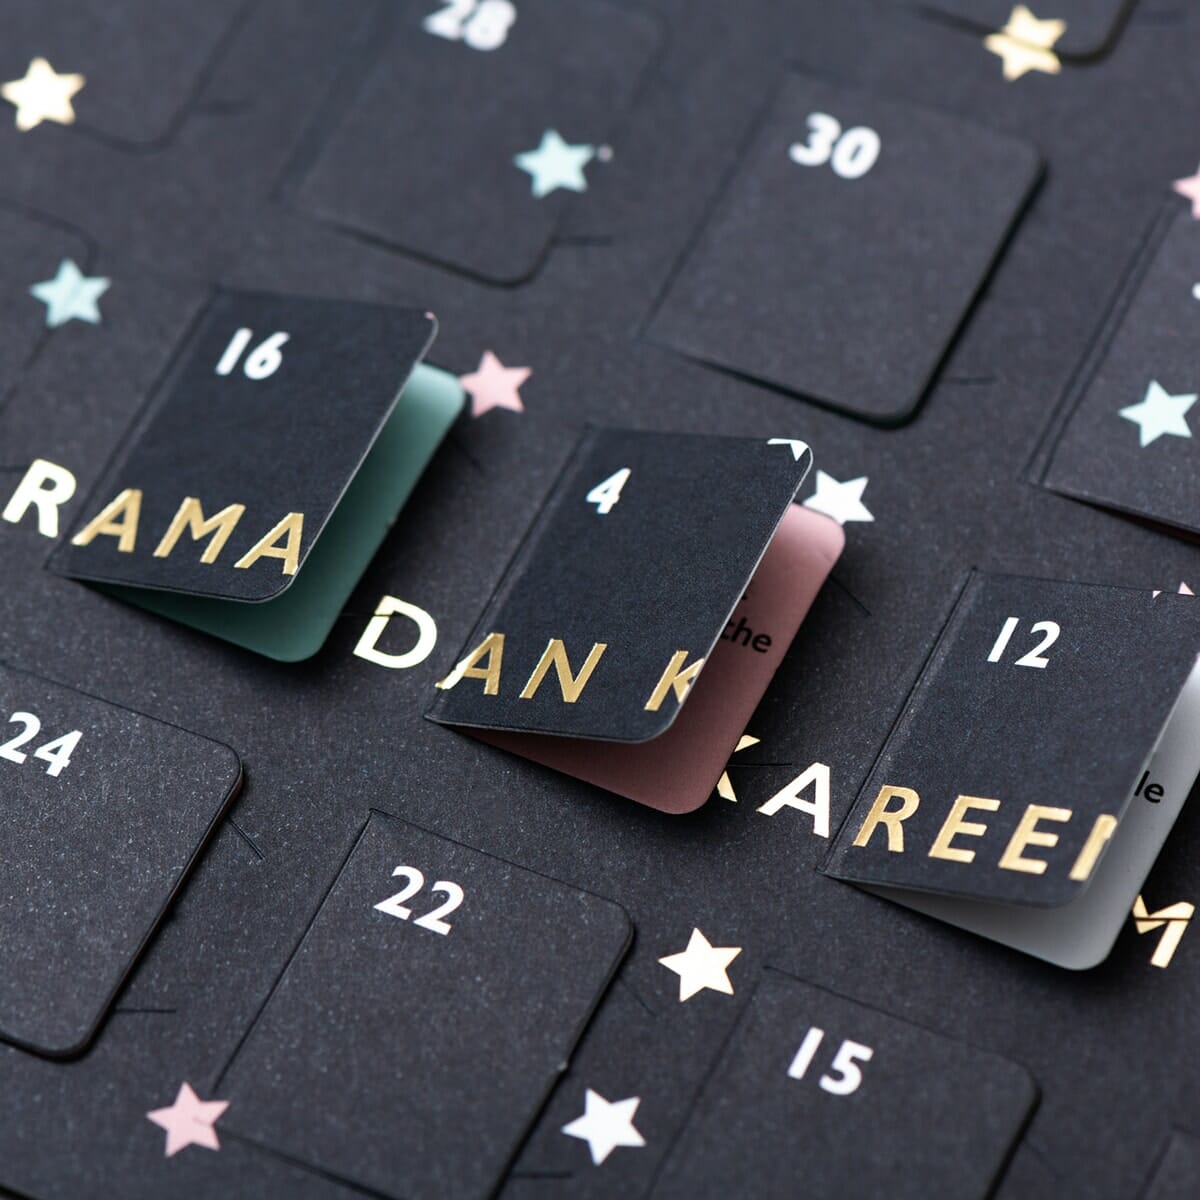 ramadan good deed calendar night sky design with open windows